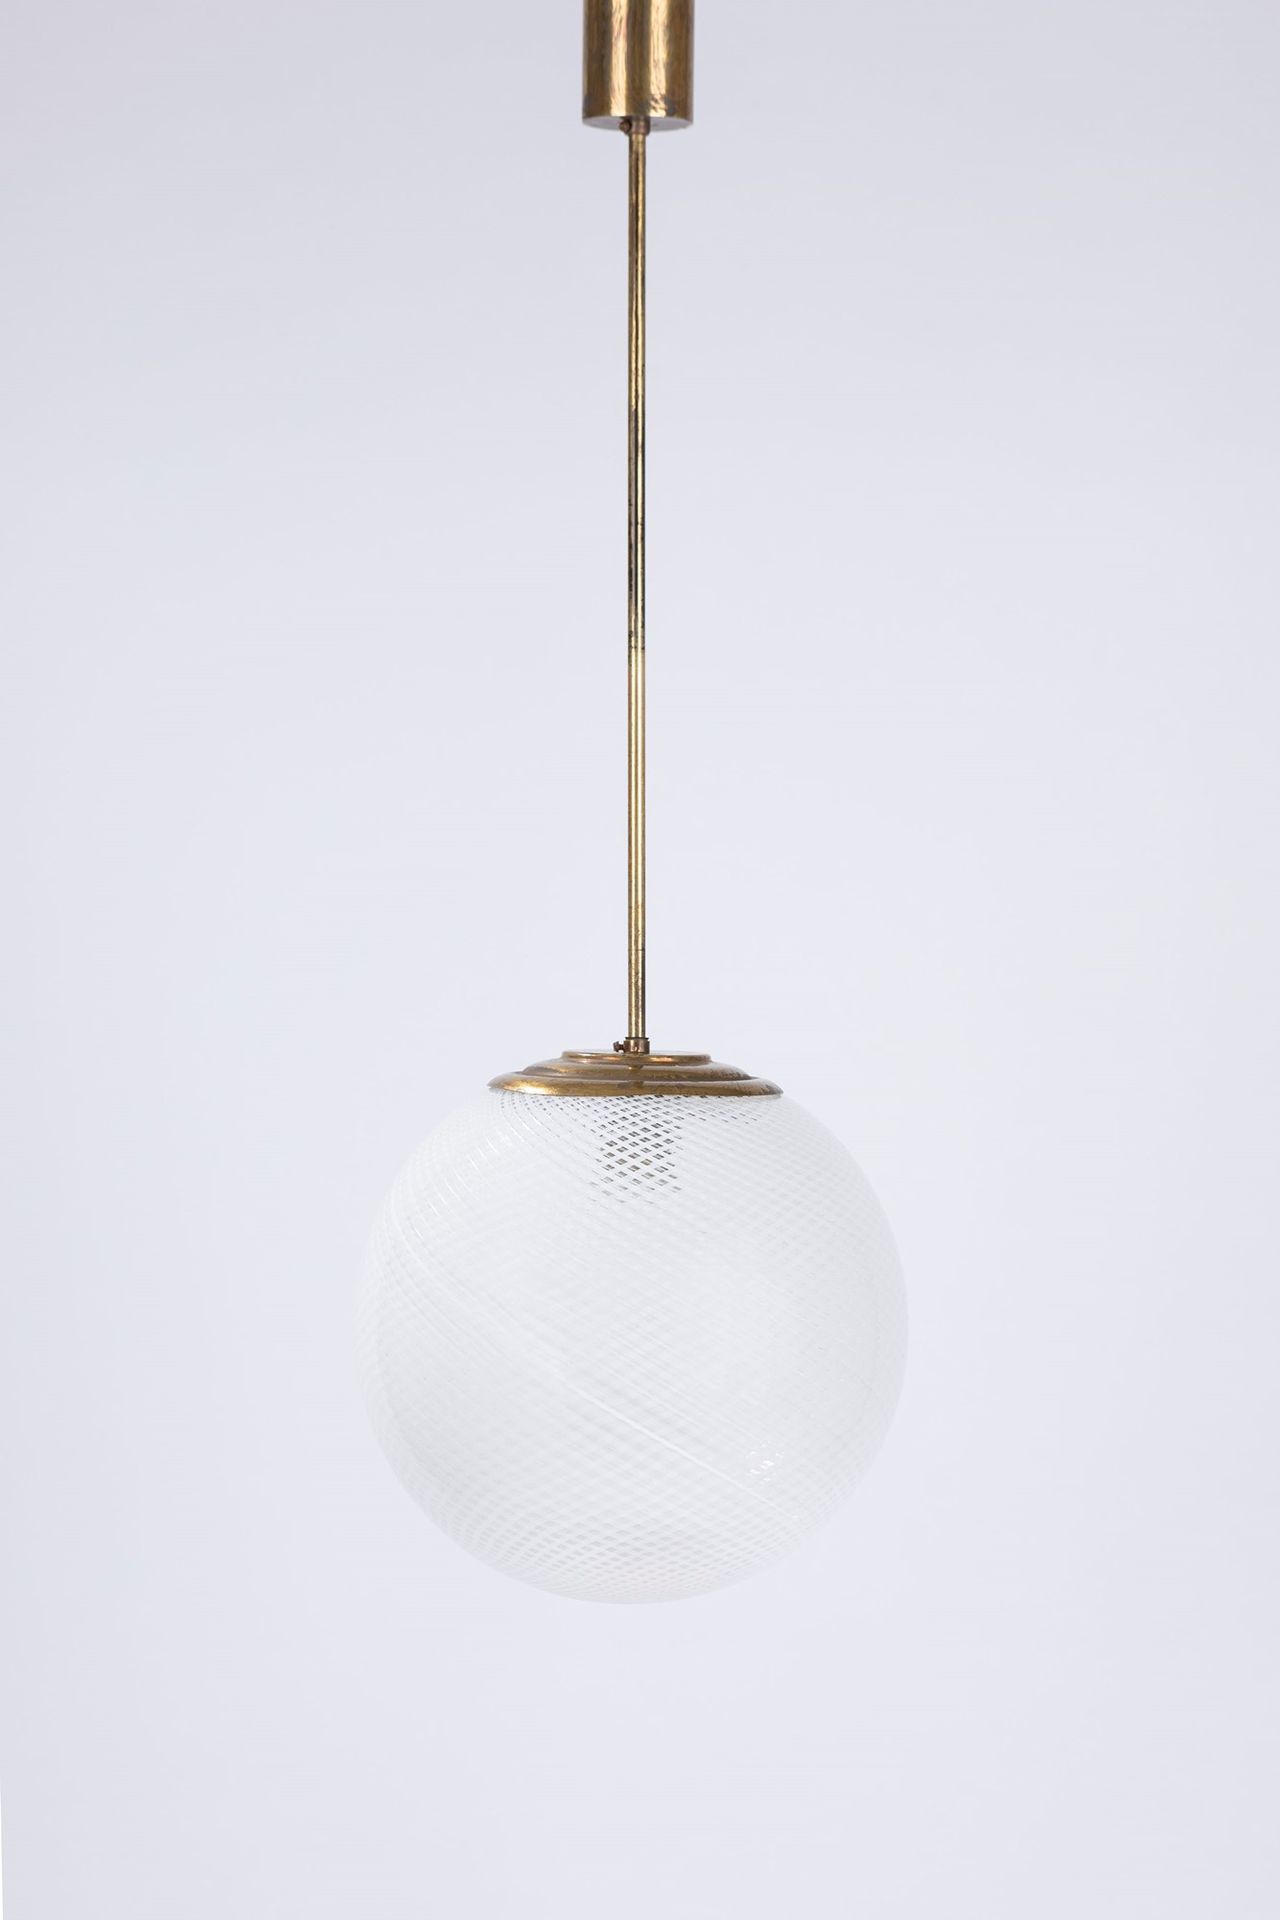 CARLO SCARPA 吊灯，1930年左右

直径23厘米
reticello玻璃，金属结构。

威尼尼制造